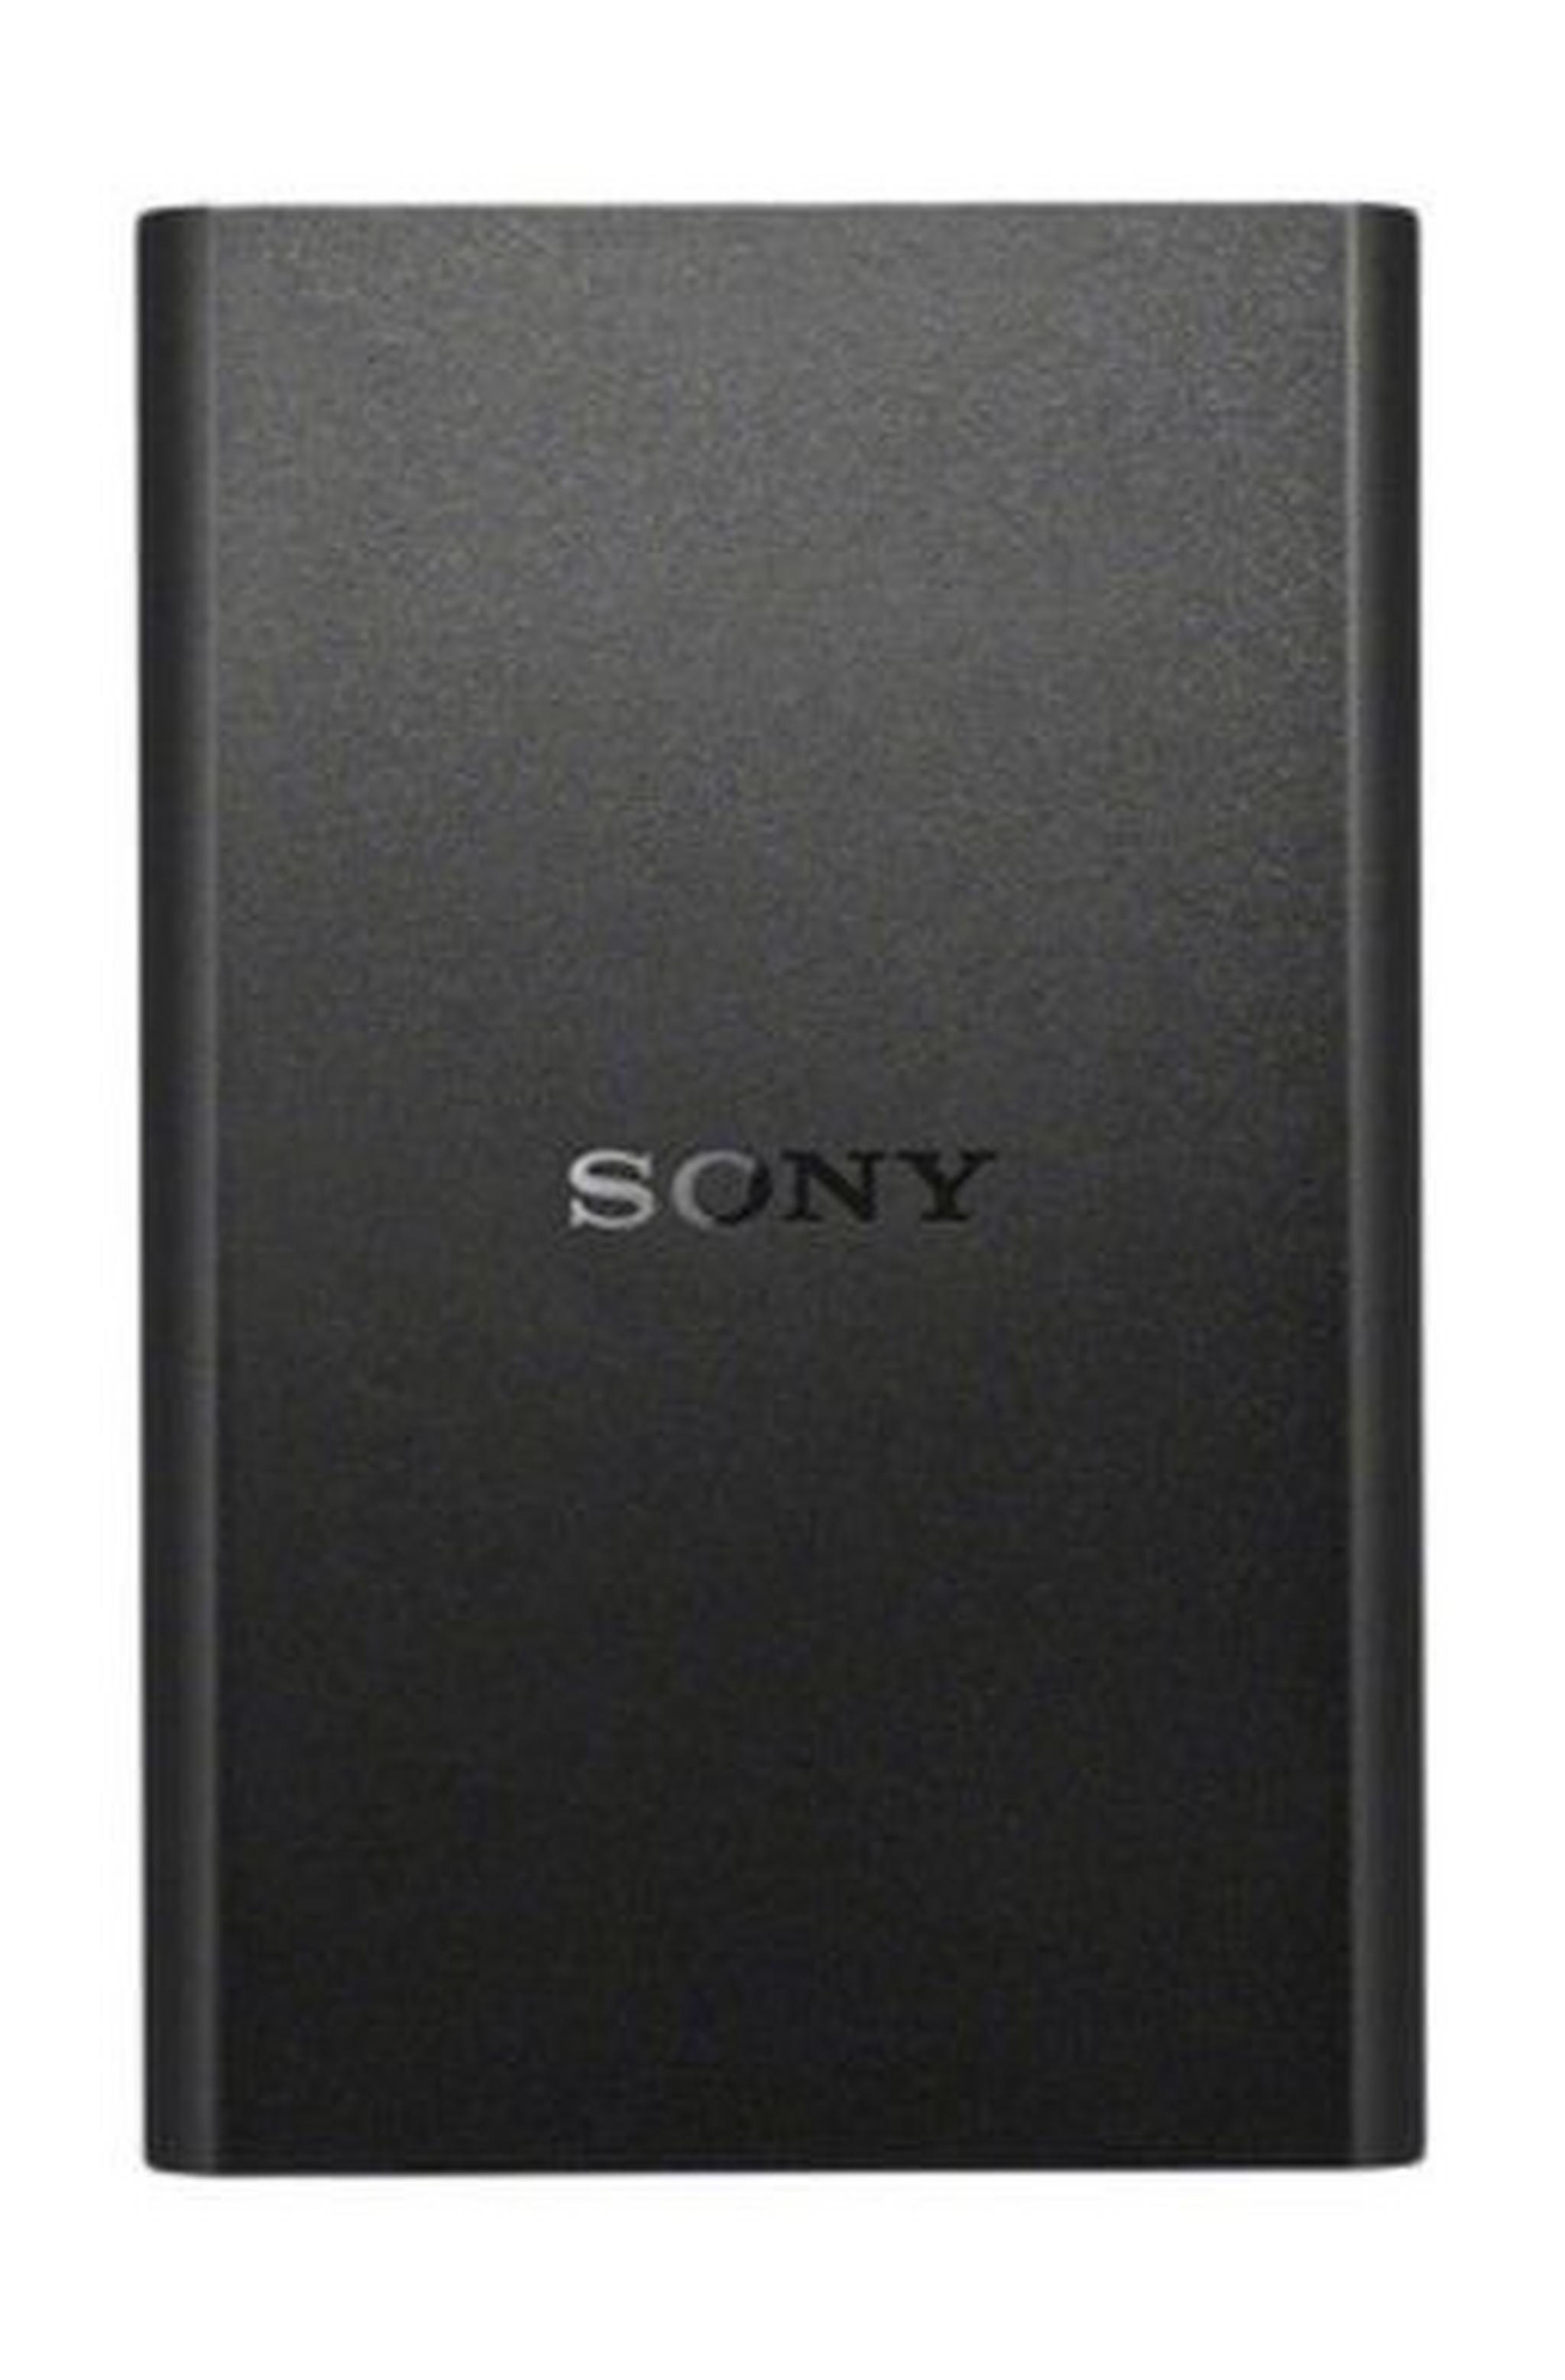 Sony External Hard Drive 2TB - Black